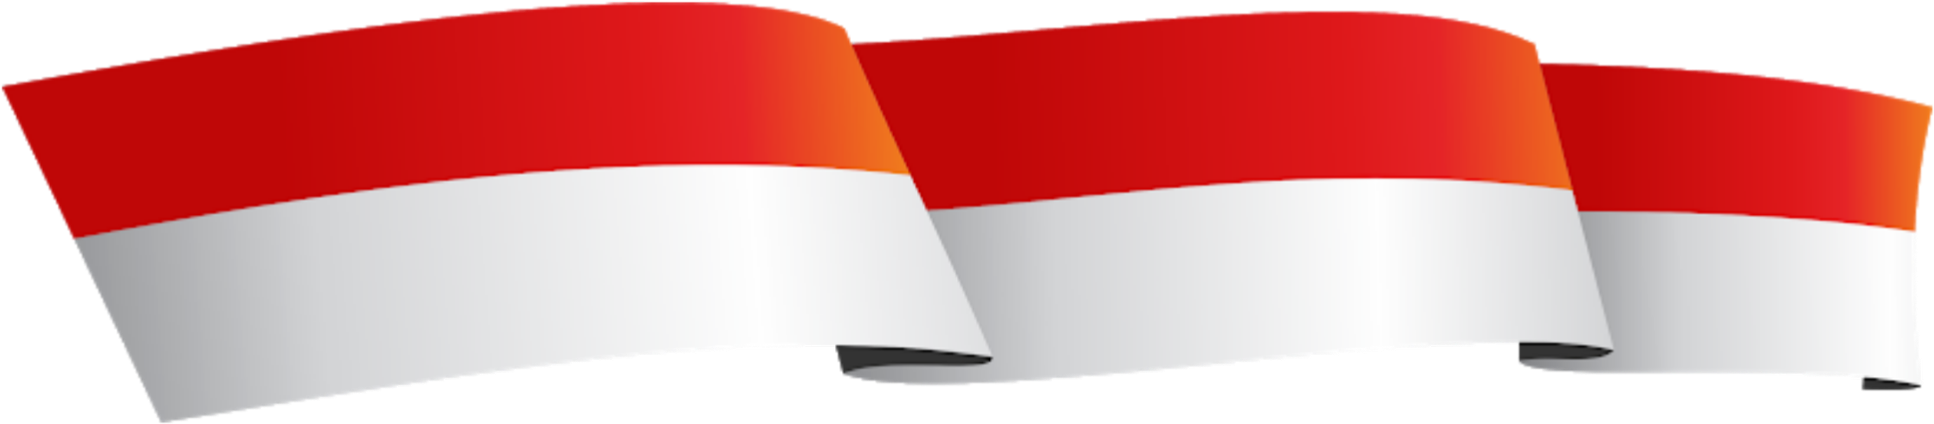 #flag #indonesianflag #indonesia #merahputih - Bendera Indonesia Berkibar Png Clipart (1024x258), Png Download